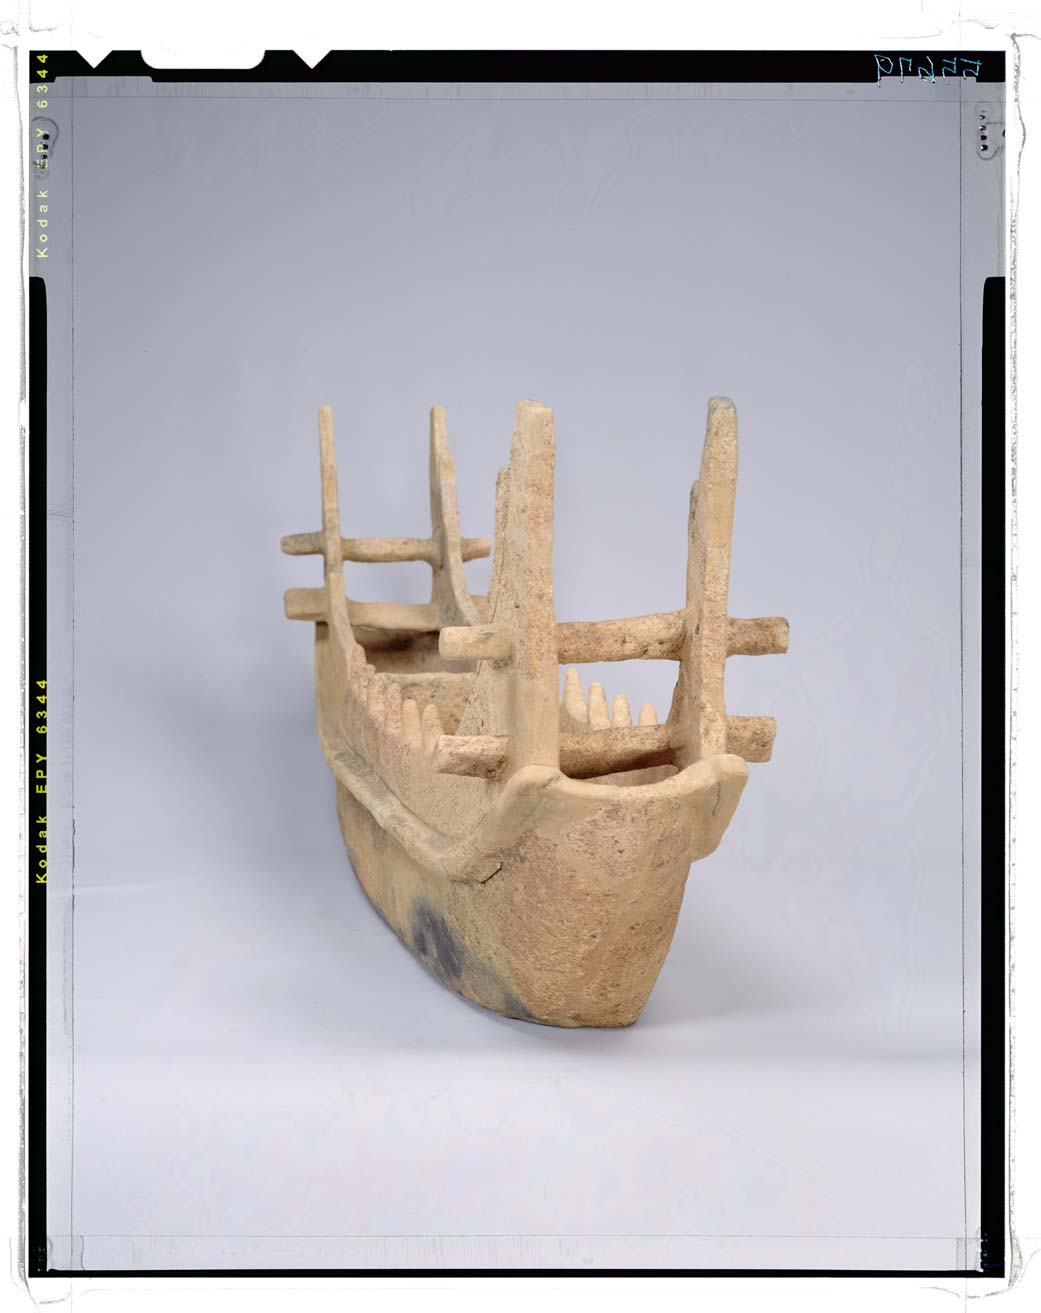 C0055679 埴輪_船 - 東京国立博物館 画像検索